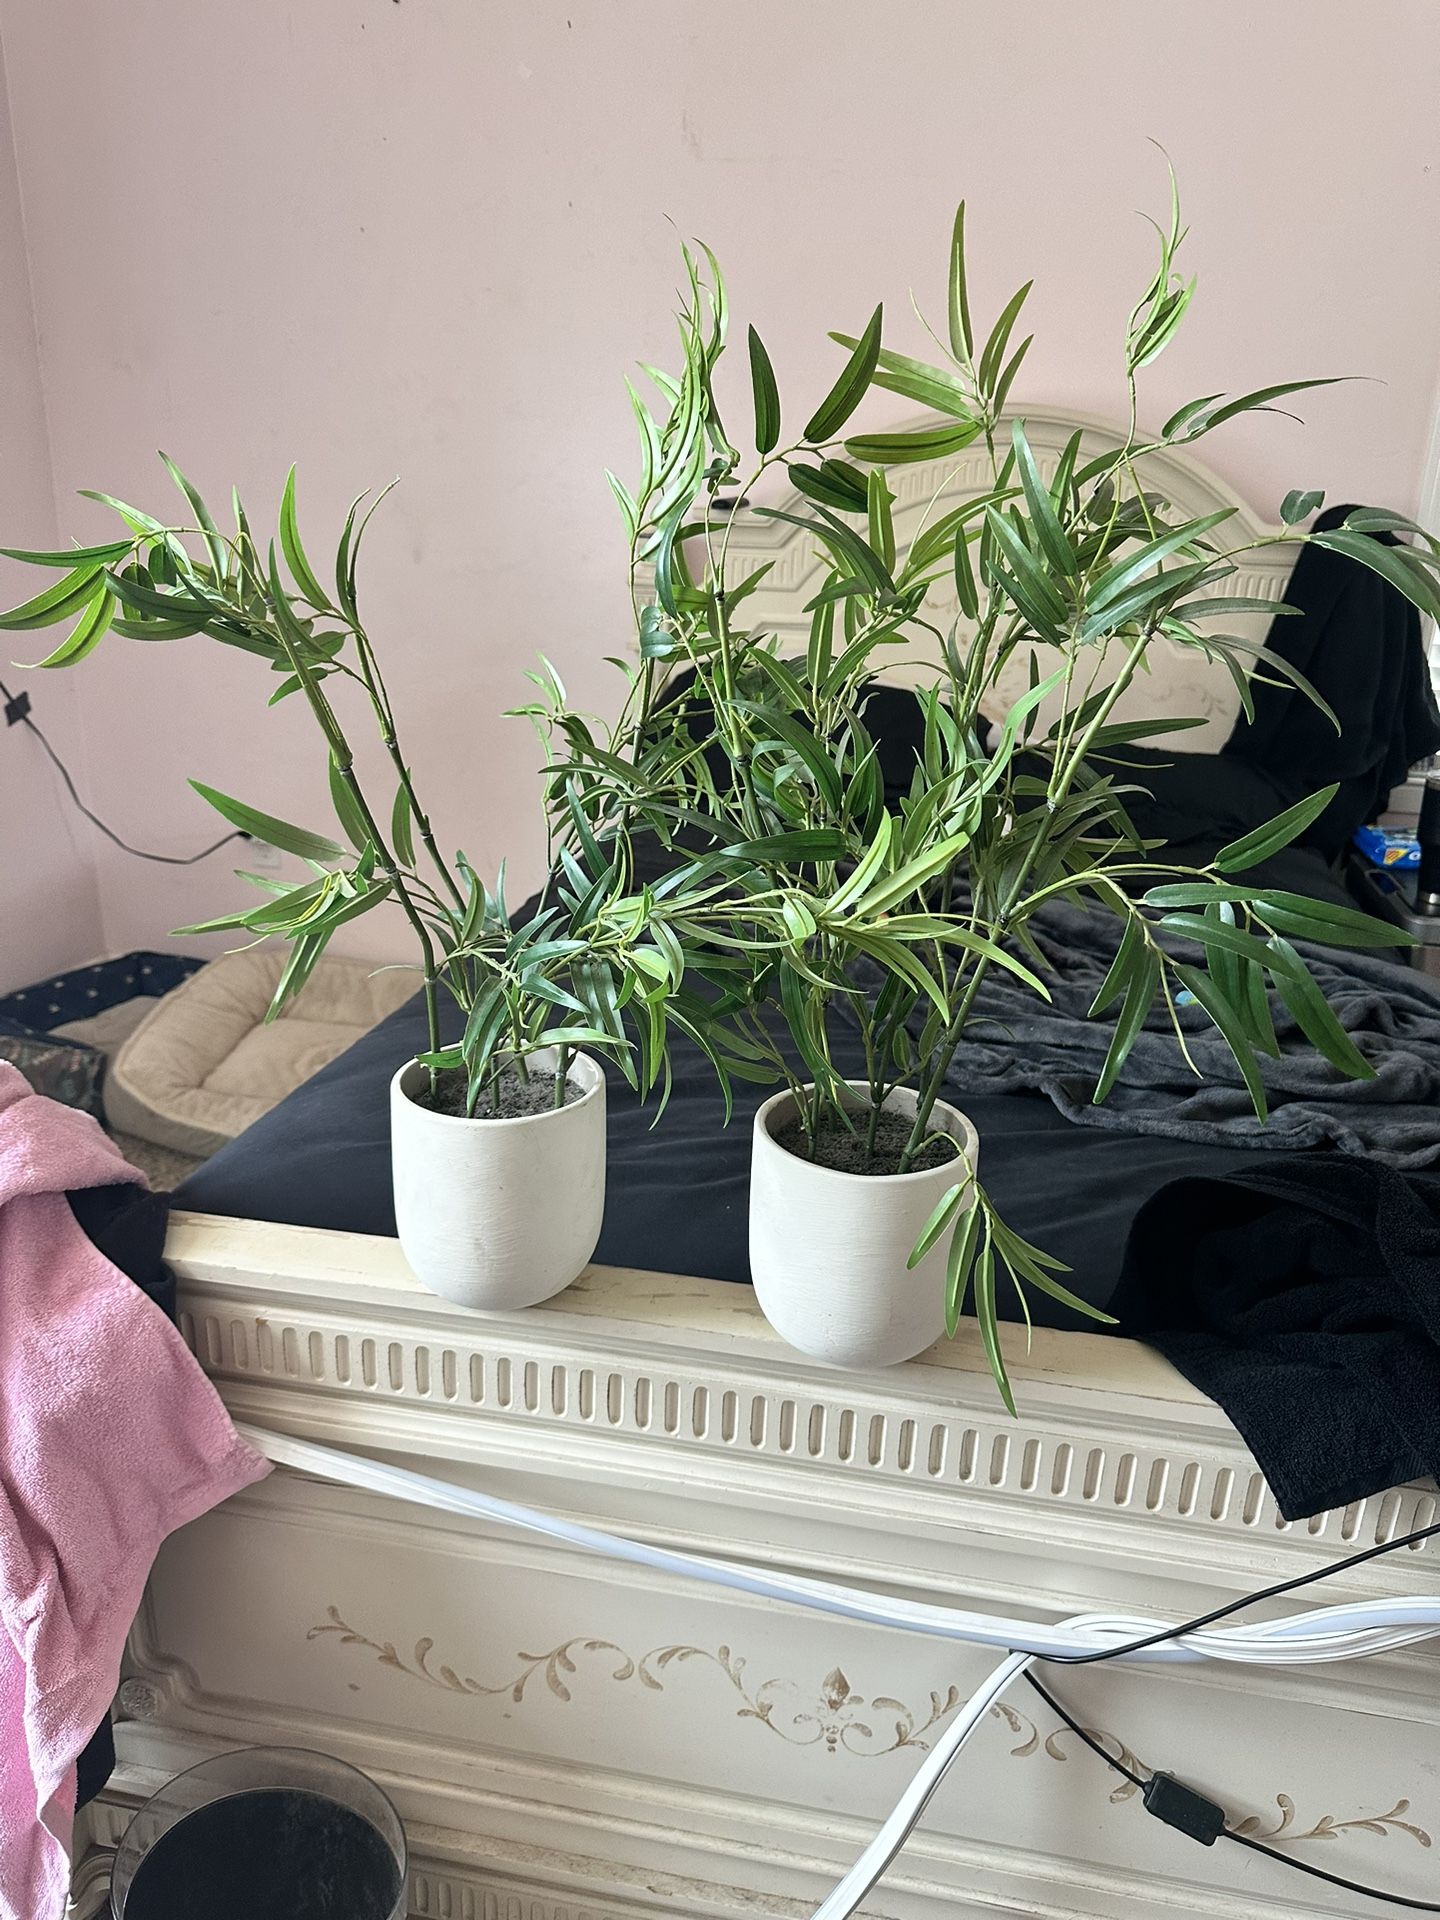 Fake Plants 